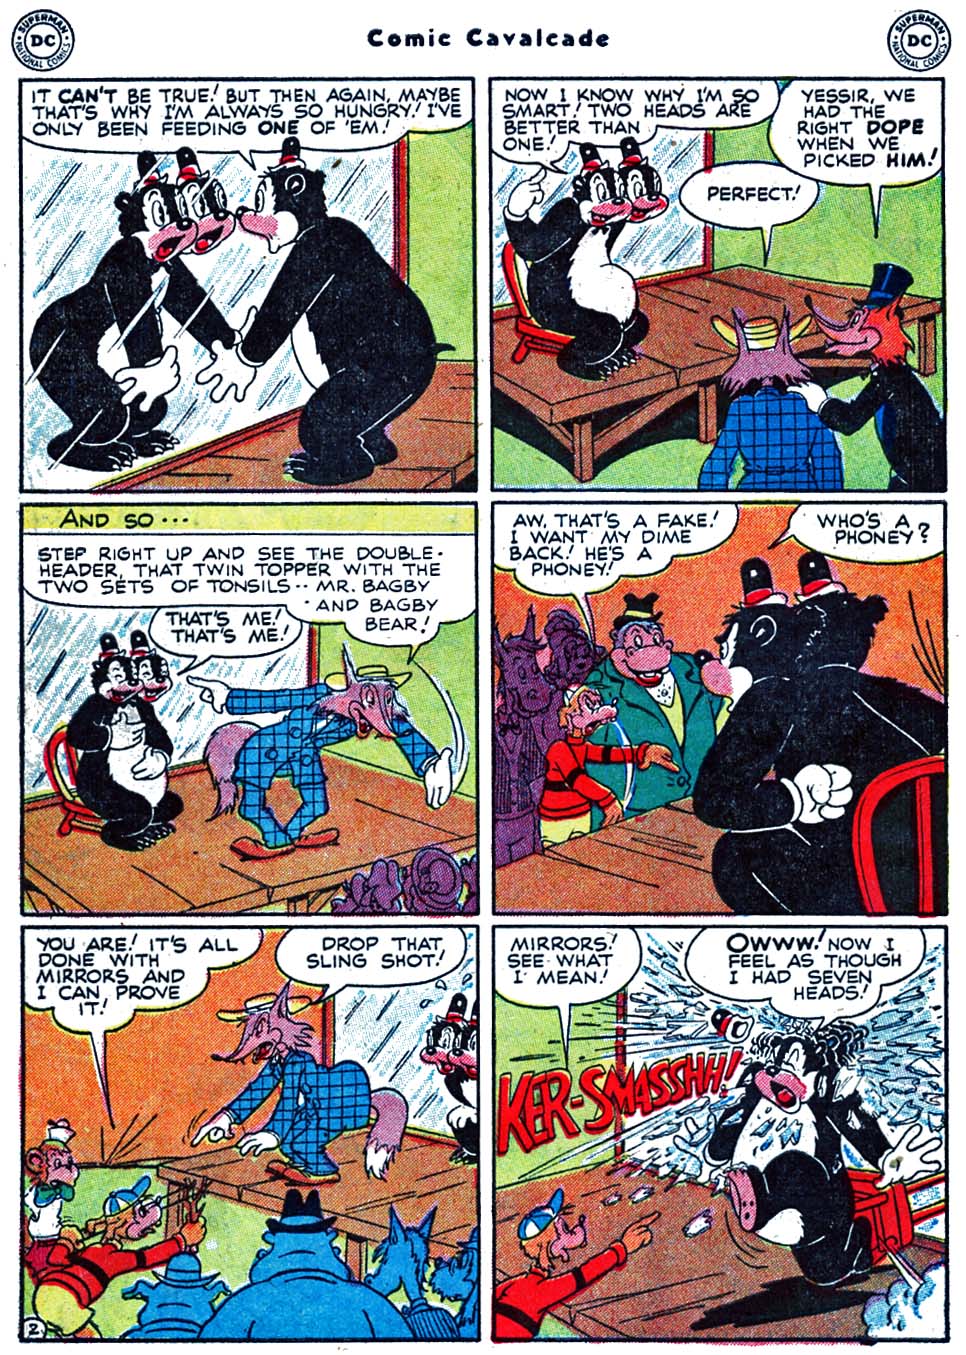 Comic Cavalcade issue 47 - Page 56